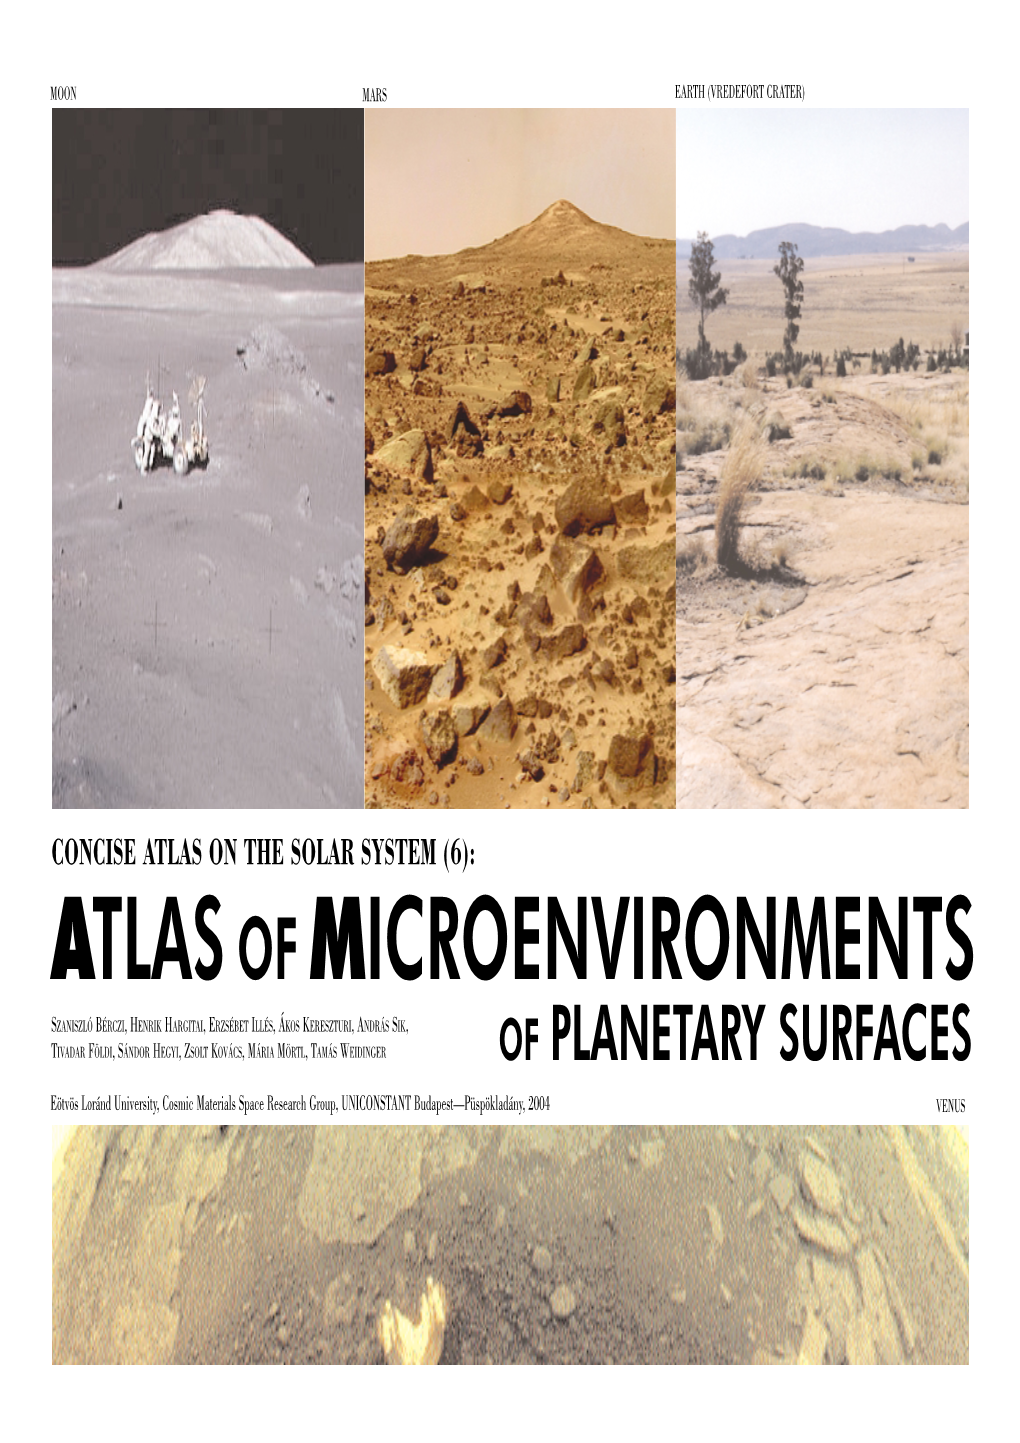 Atlas of Microenvironments